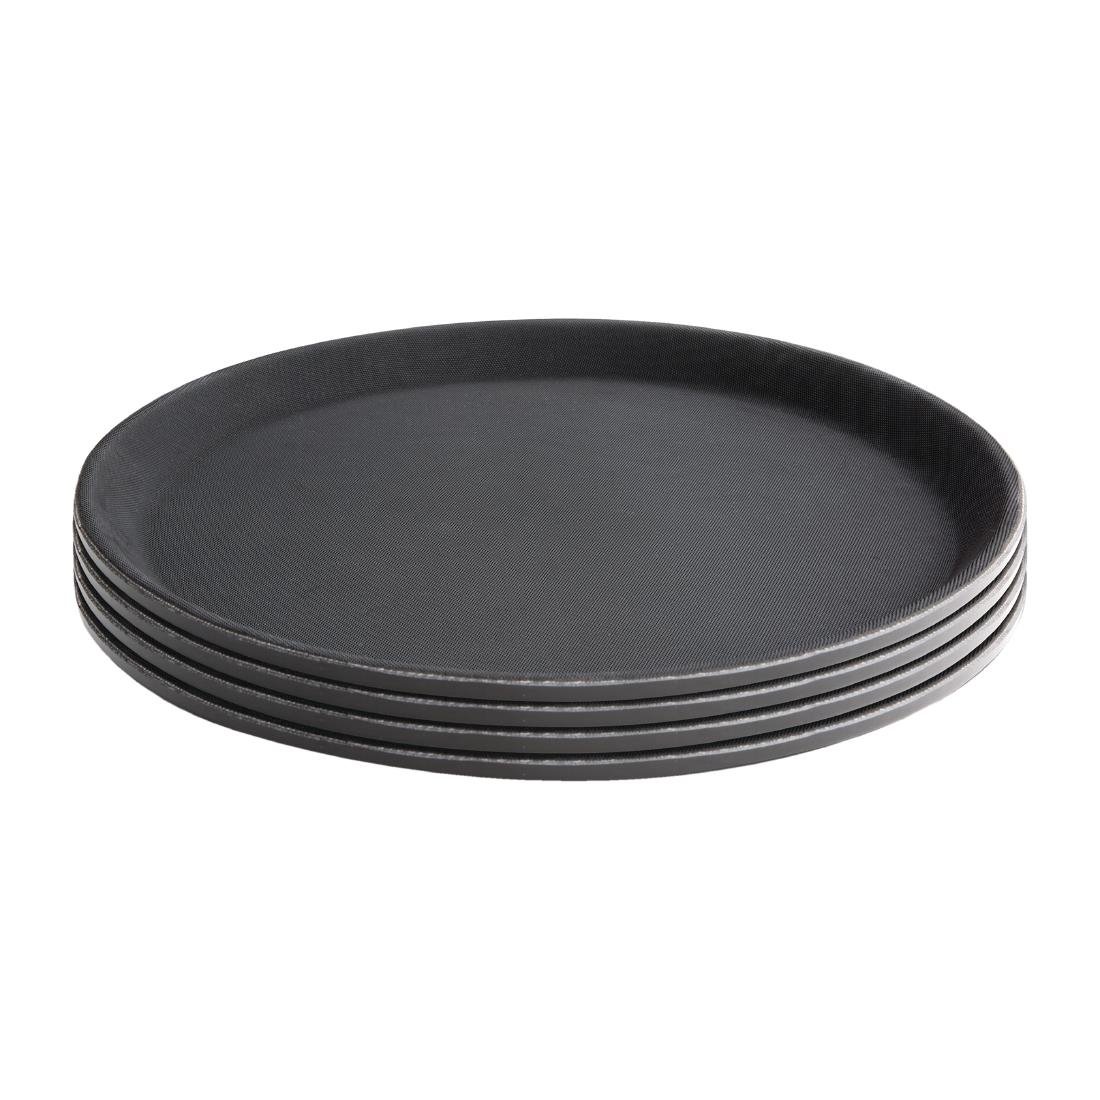 Kristallon Polypropylene Round Non-Slip Tray Black 280mm JD Catering Equipment Solutions Ltd